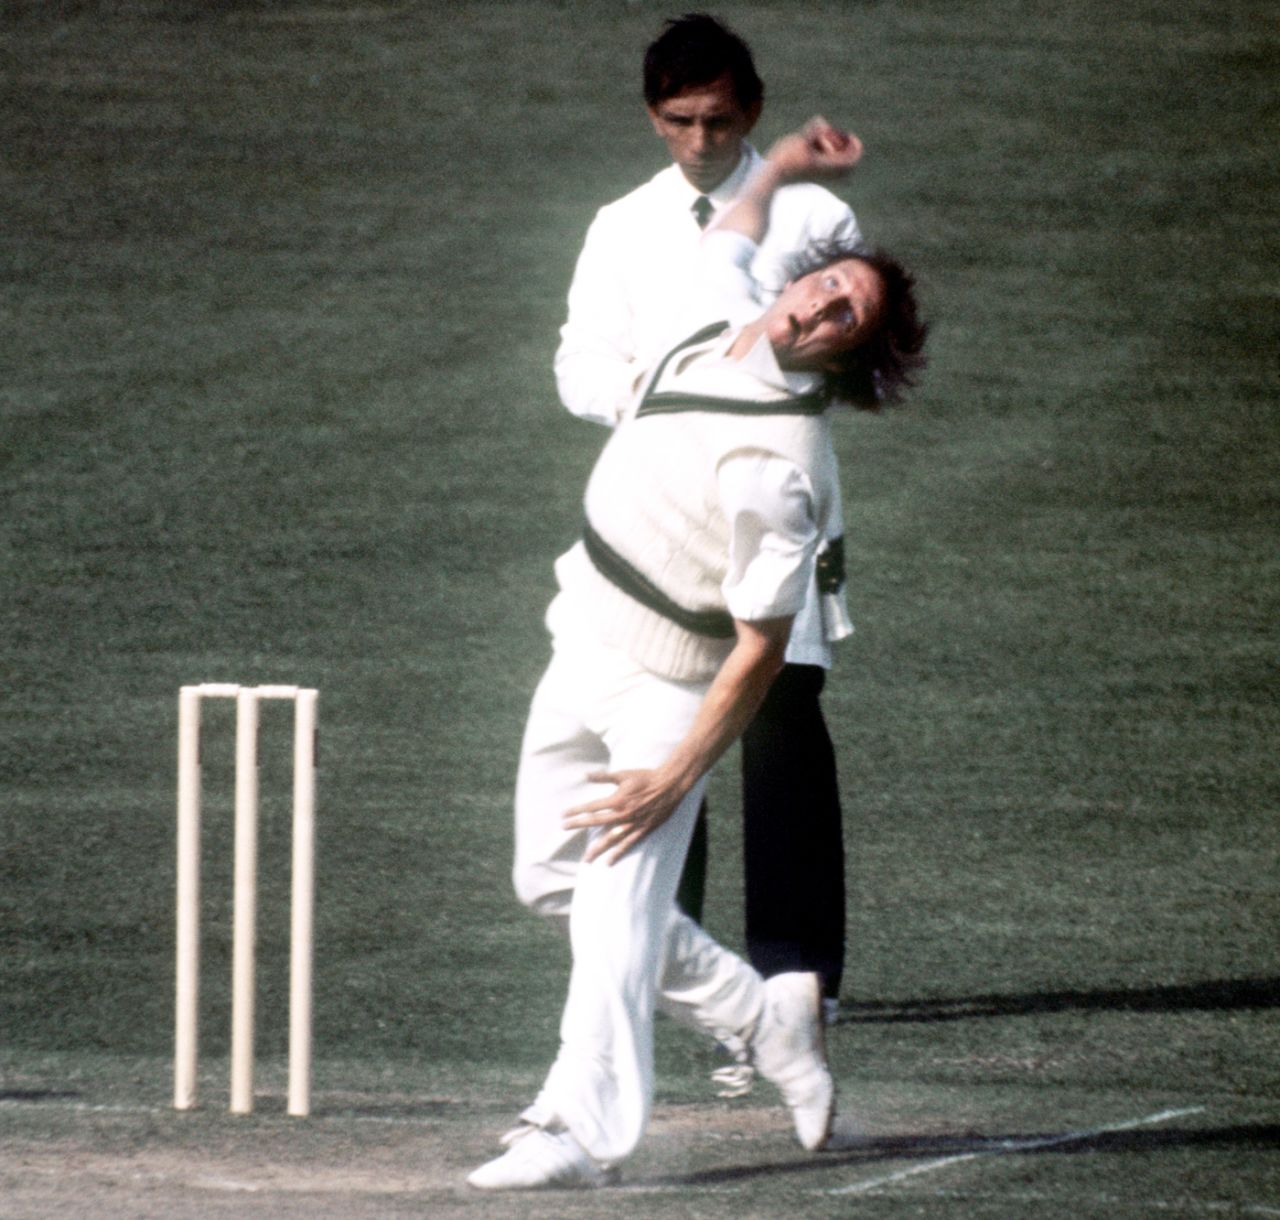 Jeff Thomson bowls, MCC v Australians, 1st day, Lord's, May 25, 1977